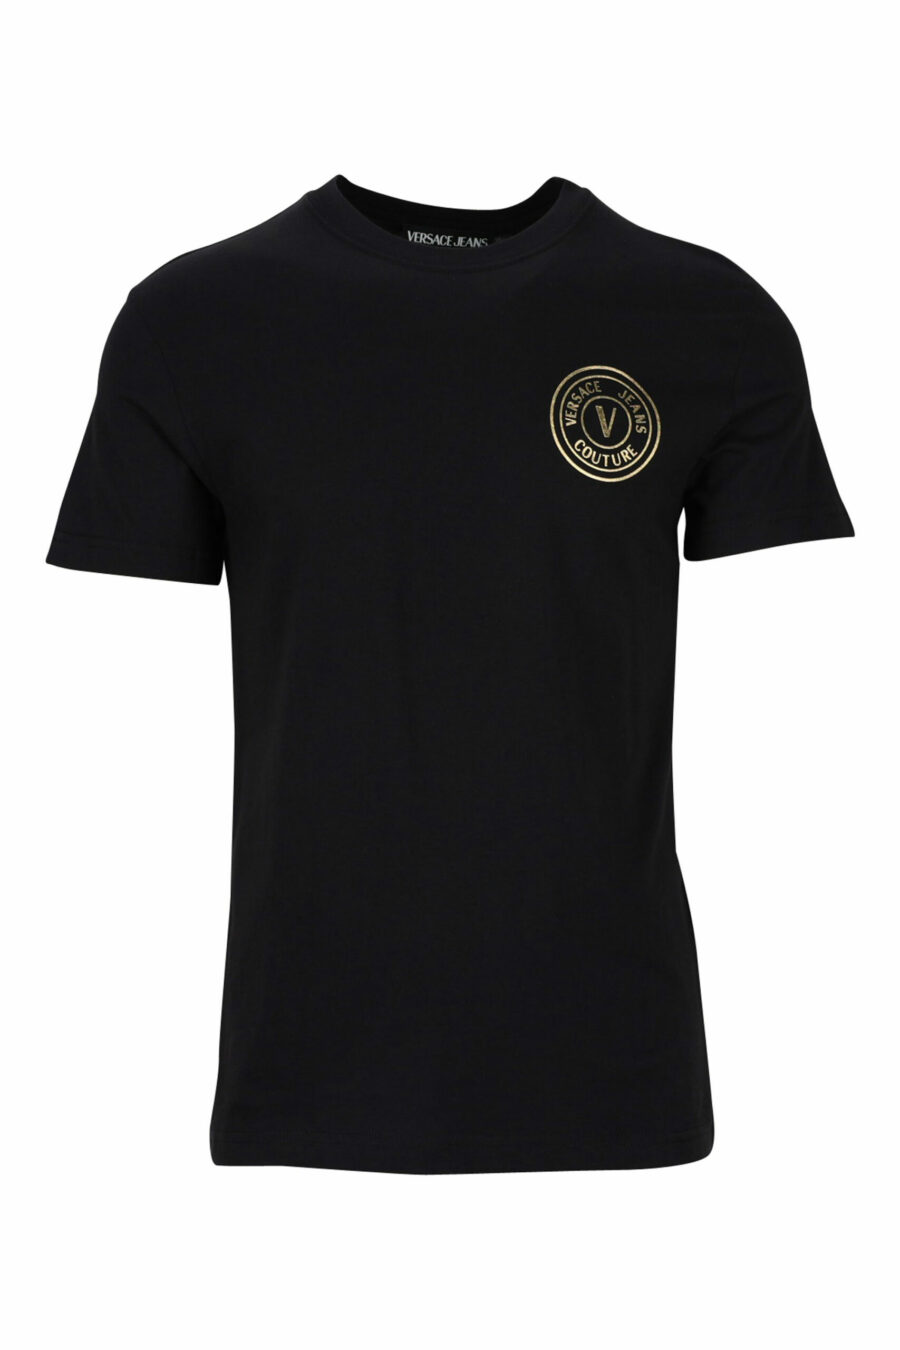 Schwarzes T-Shirt mit kreisförmigem Mini-Logo in Gold - 8052019468465 skaliert